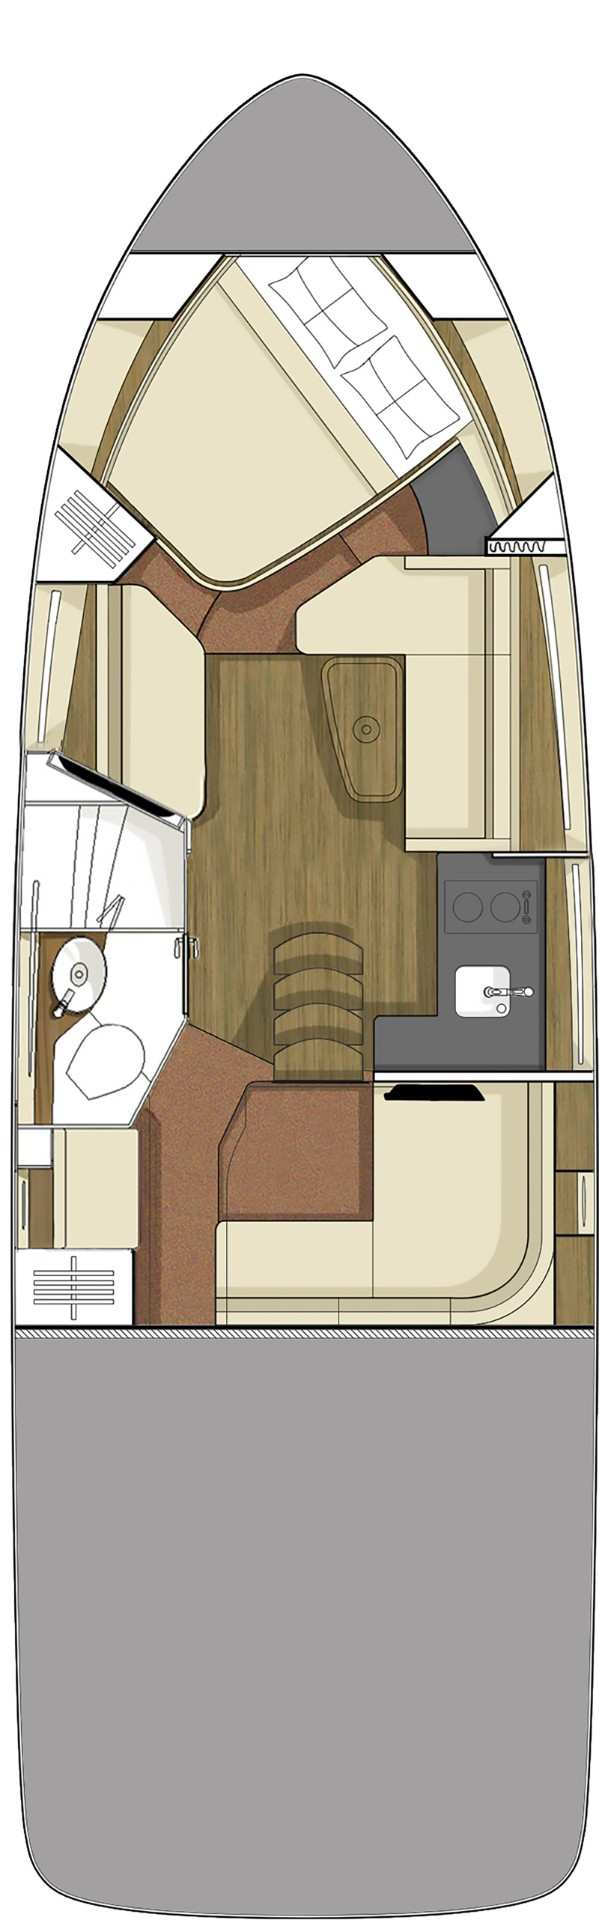 Sundancer 350 Cabin Option floor plan